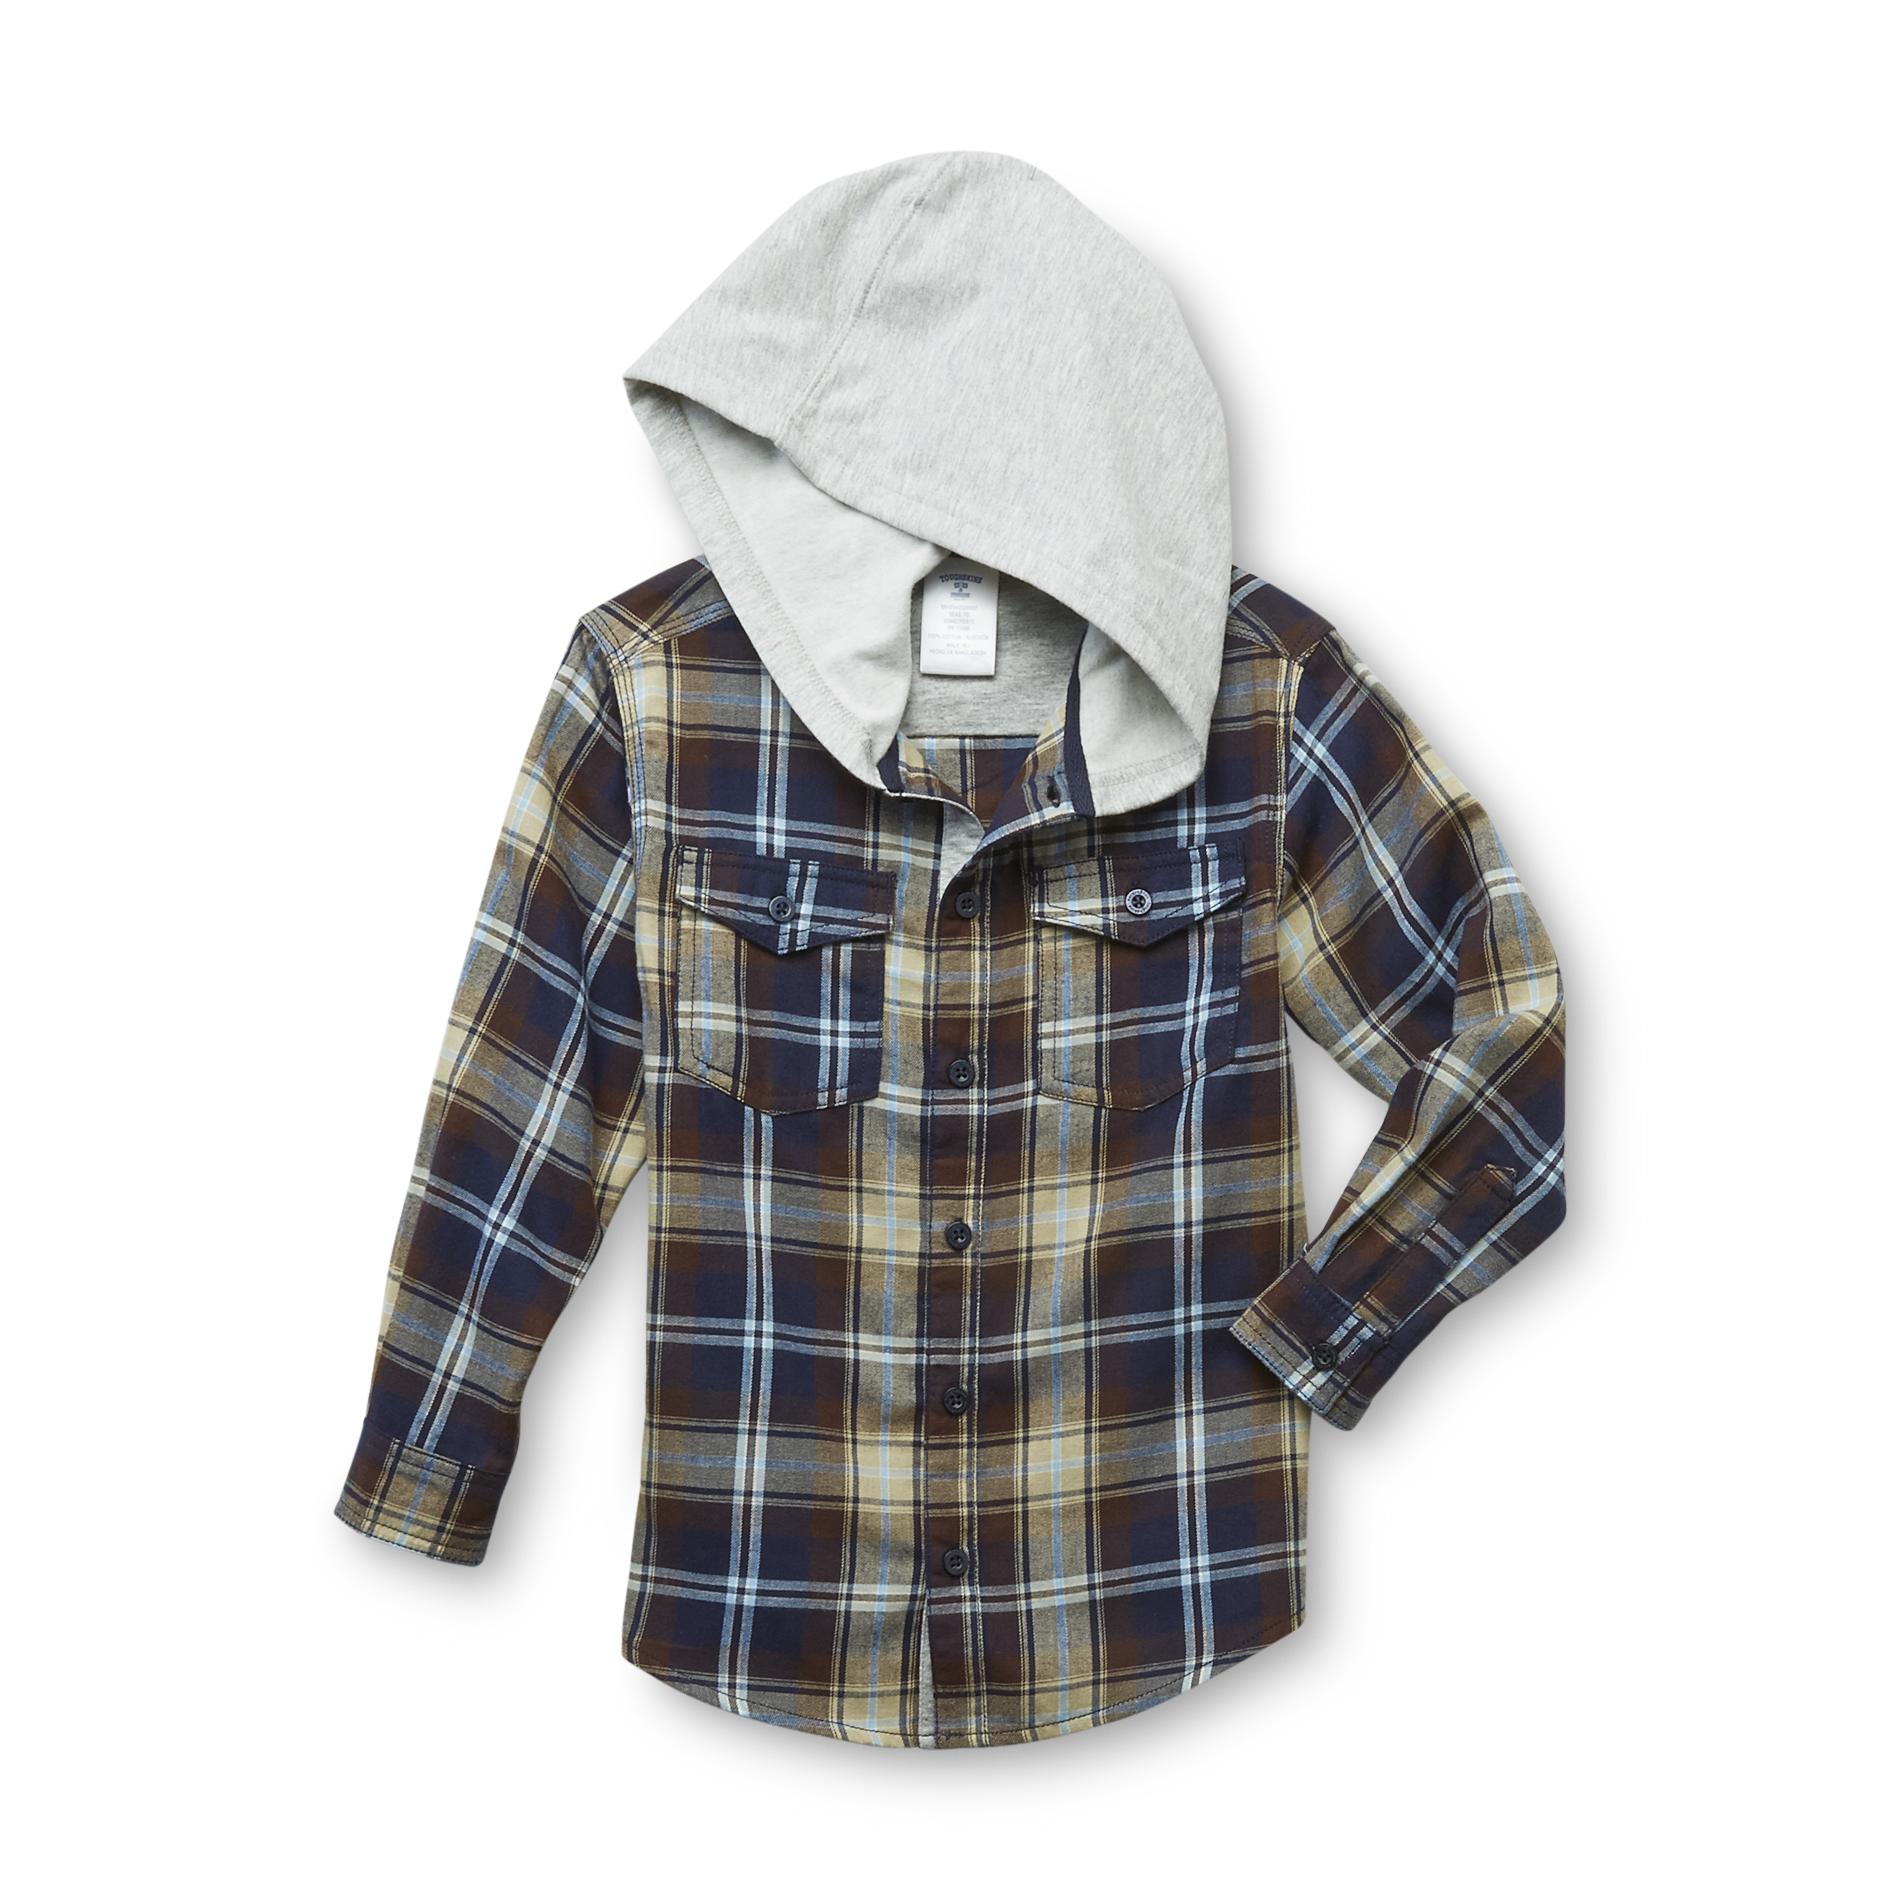 Toughskins Boy's Hooded Flannel Shirt - Plaid